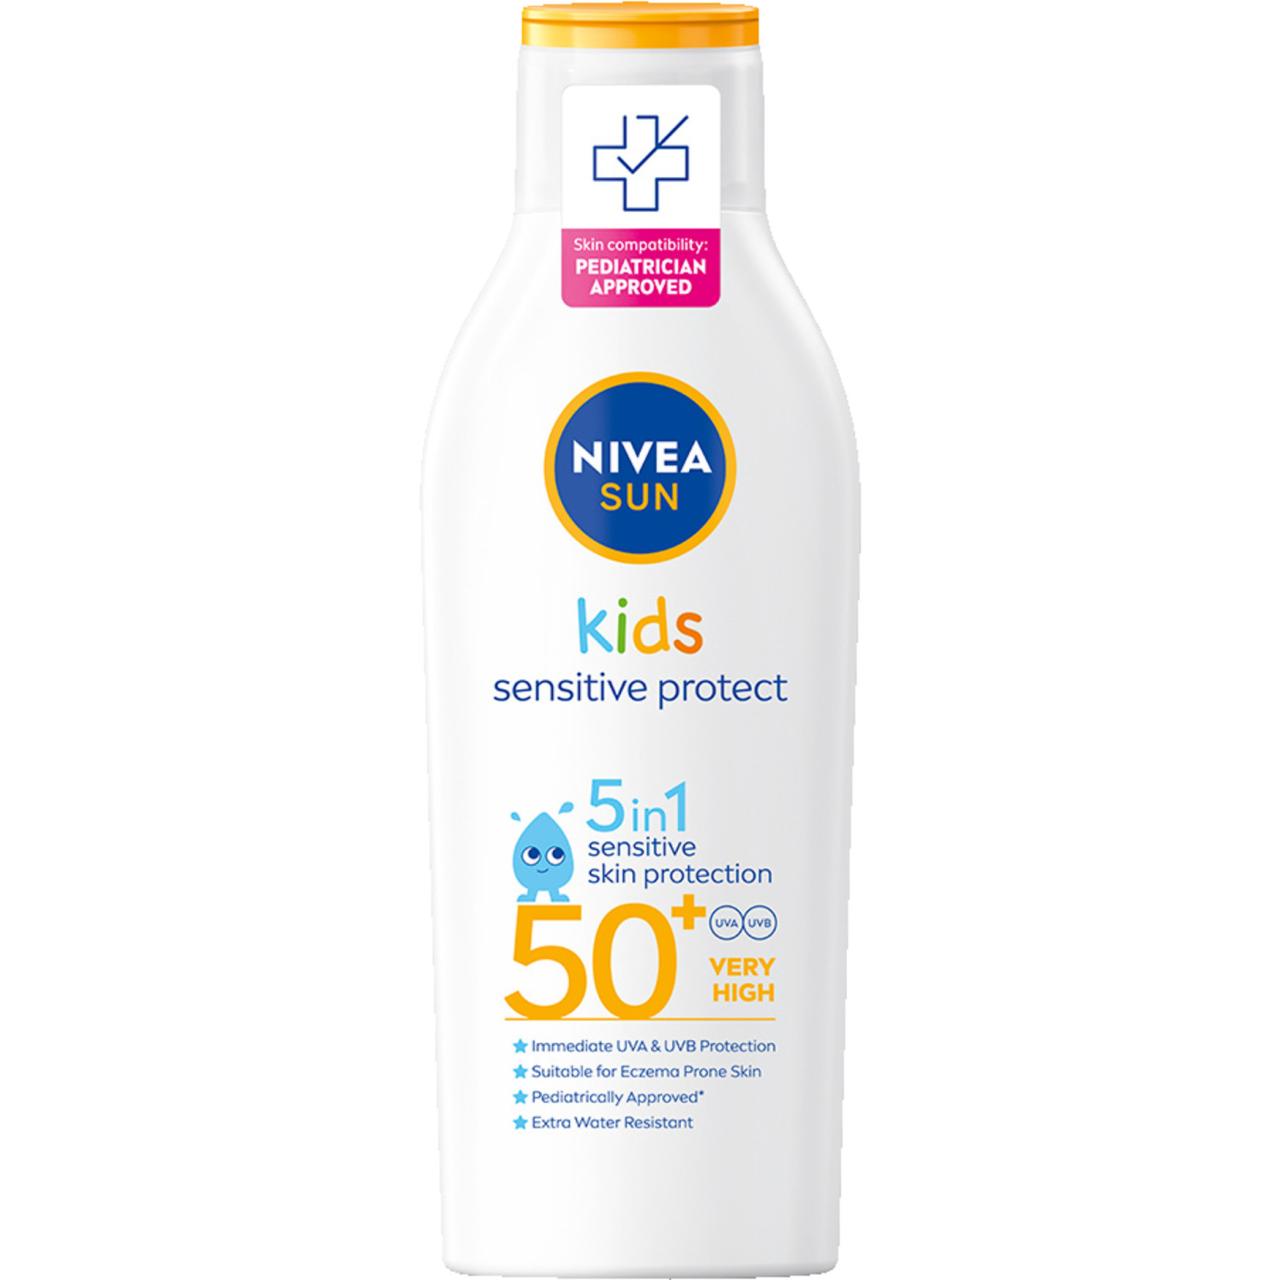 Nivea Sun Kids Sensitive Lotion SPF50+ 200ml